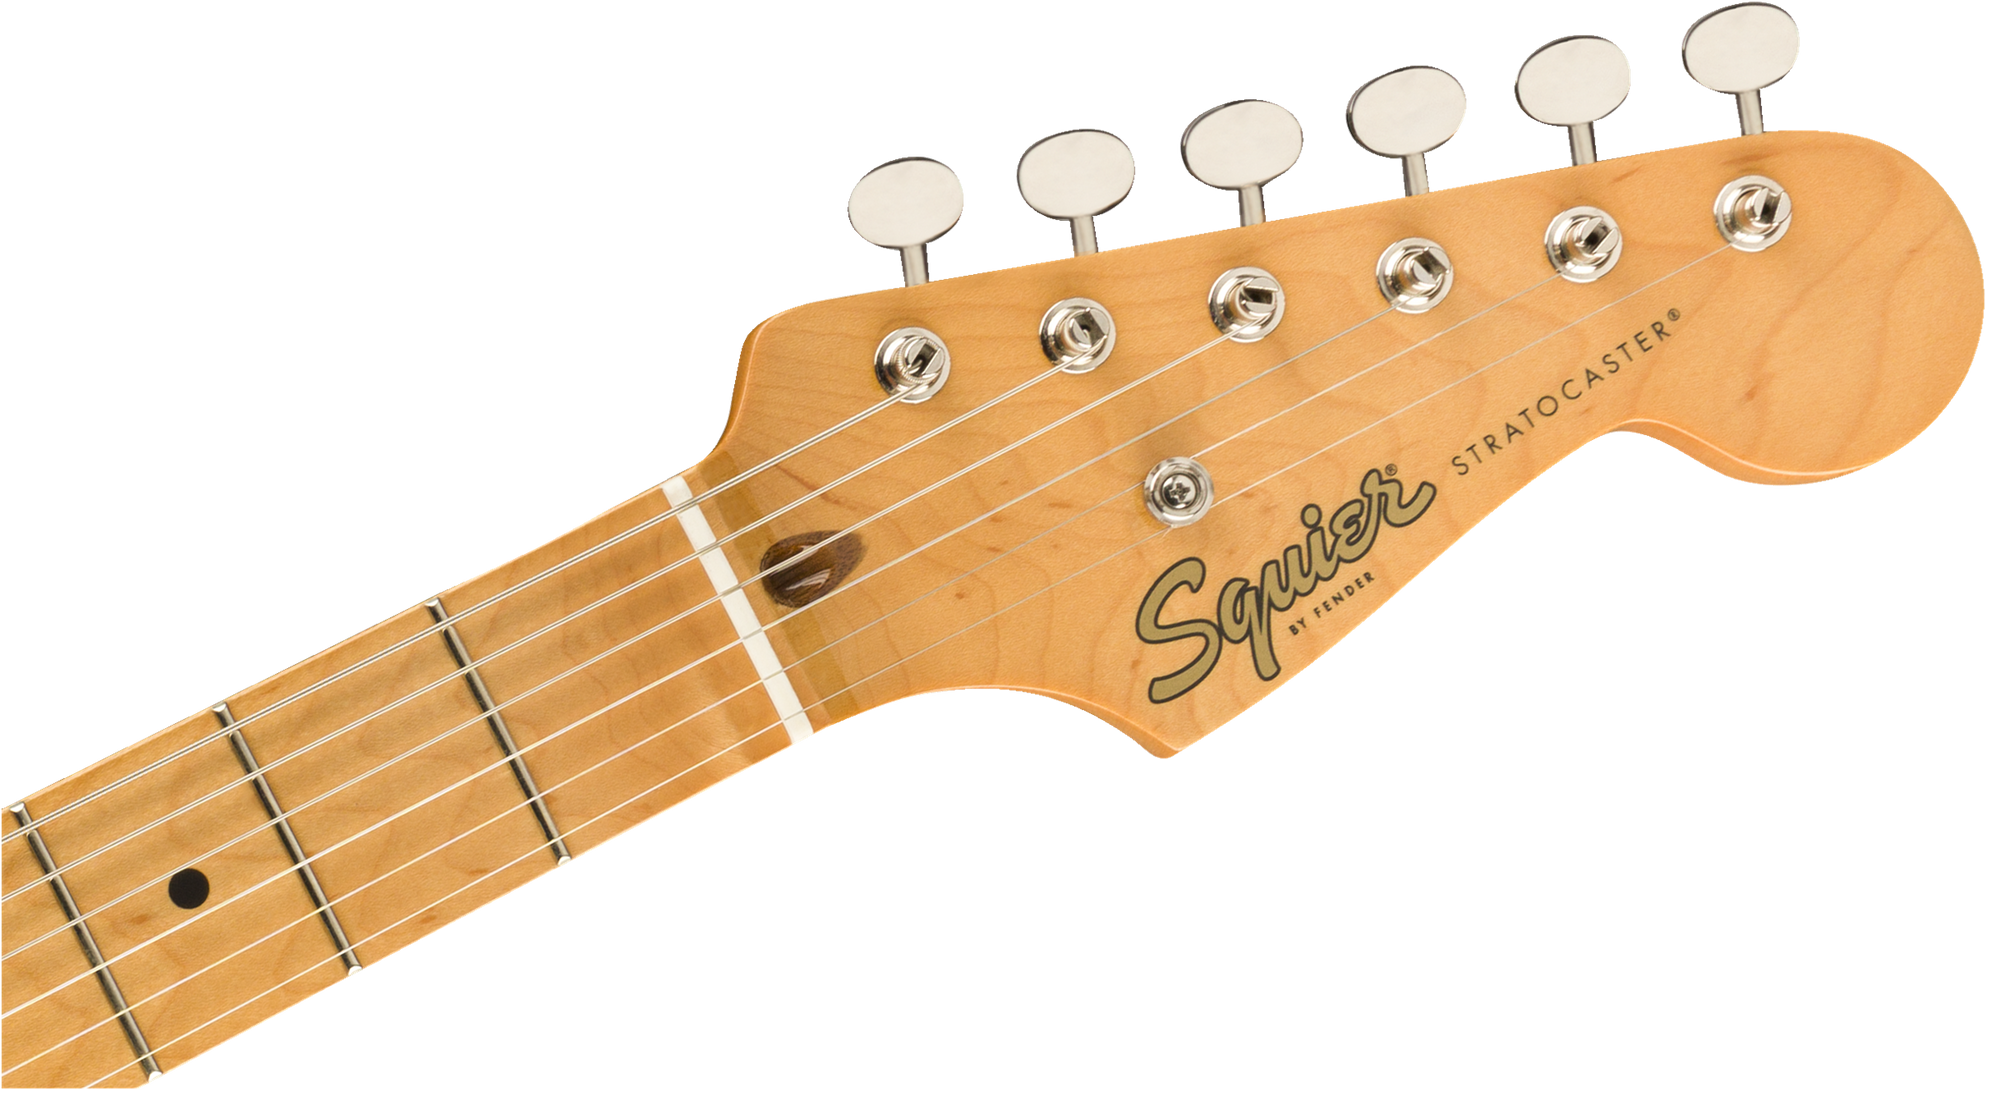 Classic Vibe '50s Stratocaster, Black , Maple Fingerboard